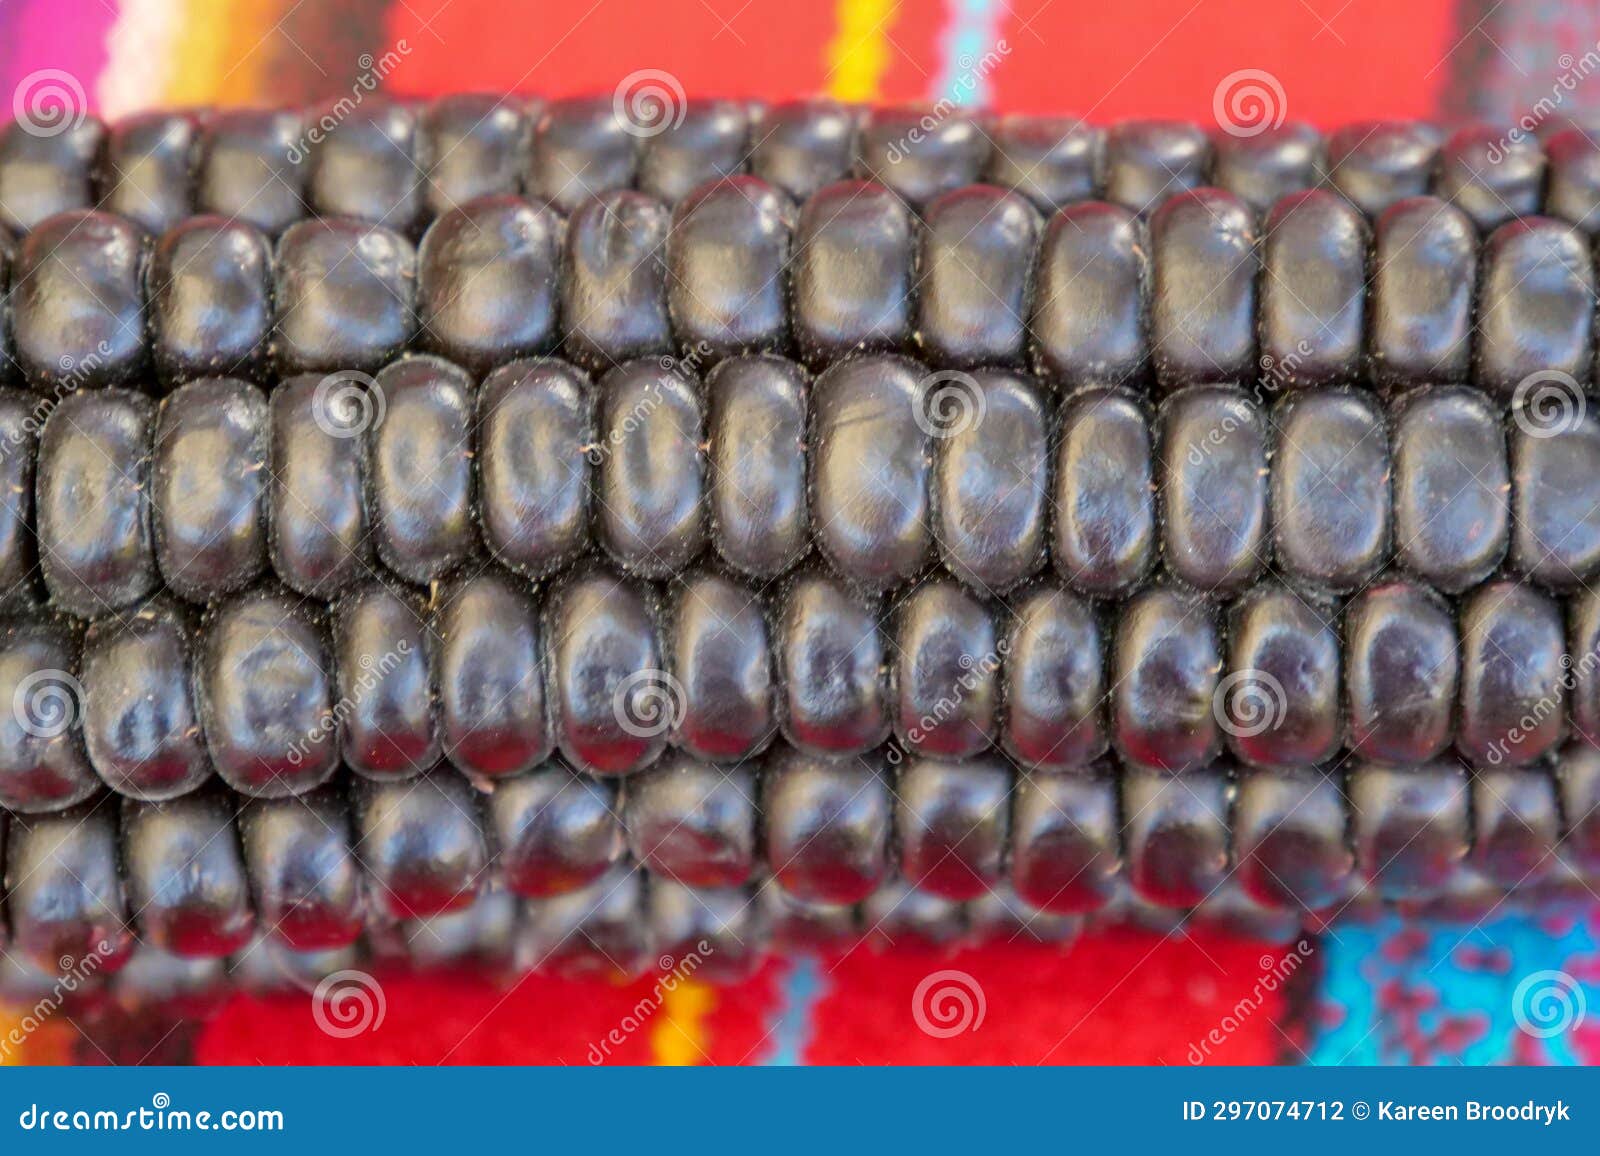 close up of maiz morado, purple corn, zea mays indurata, k'culli or black aztec corn on a traditional colourful peruvian